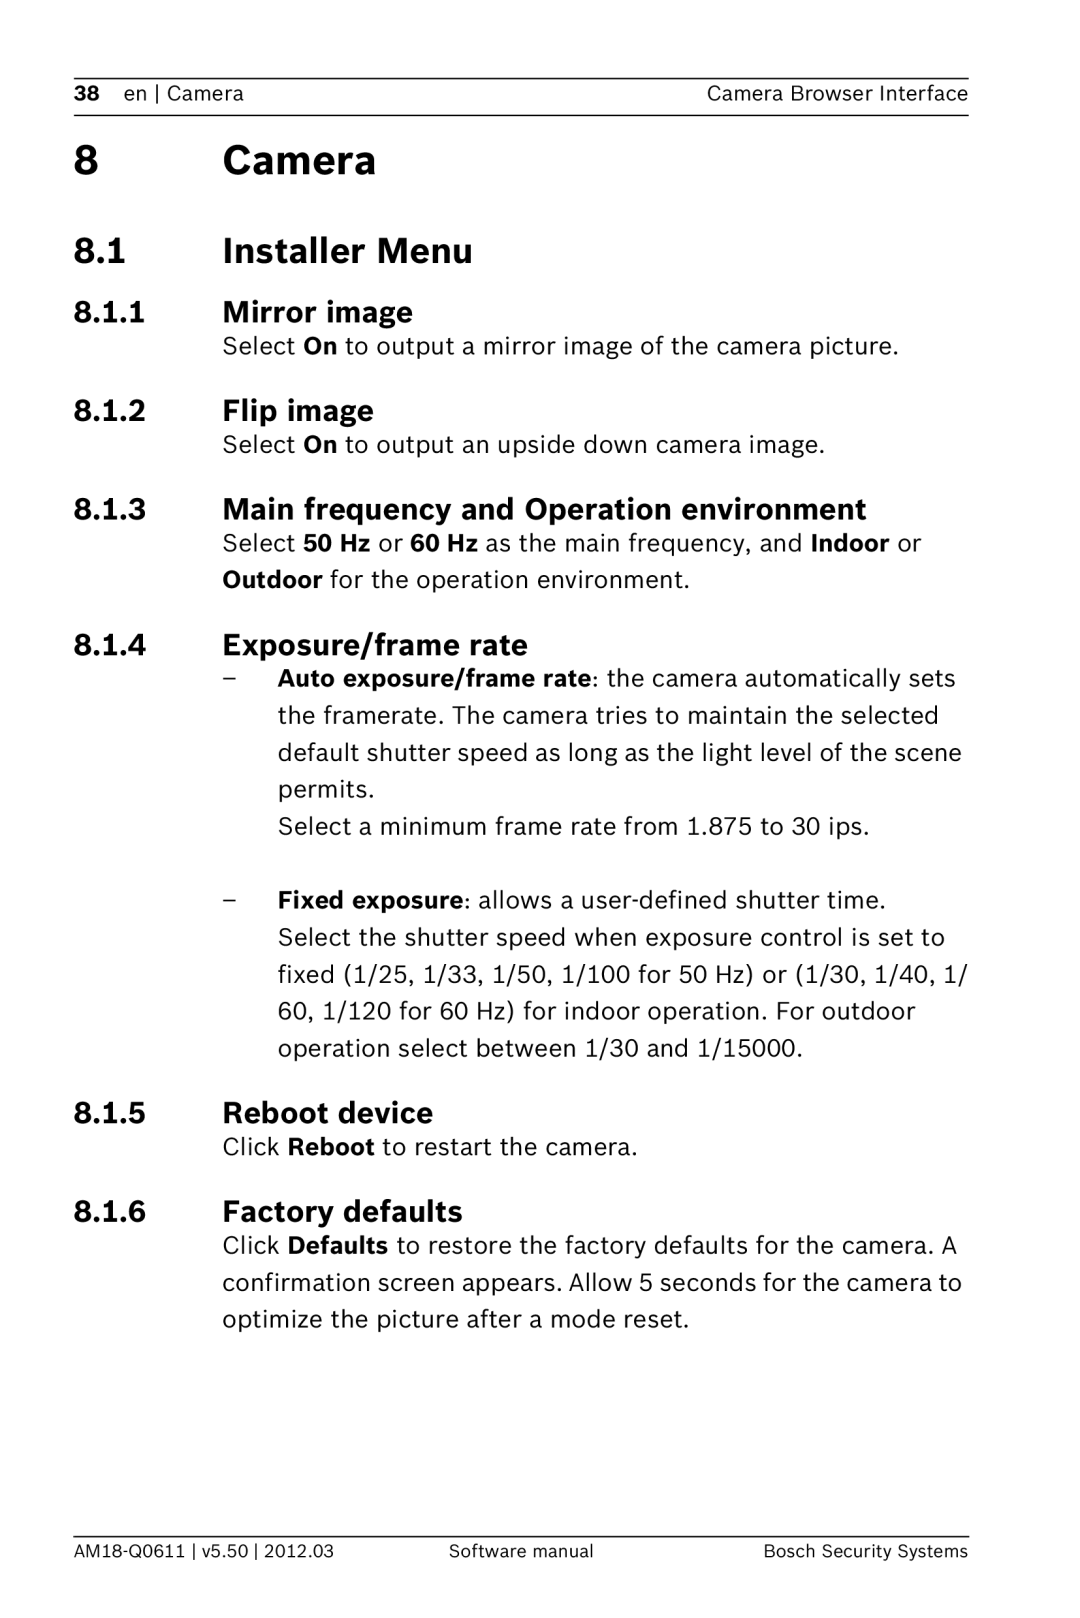 Bosch Appliances FW5.50 8Camera, 8.1Installer Menu, 8.1.1Mirror image, 8.1.2Flip image, 8.1.4Exposure/frame rate 